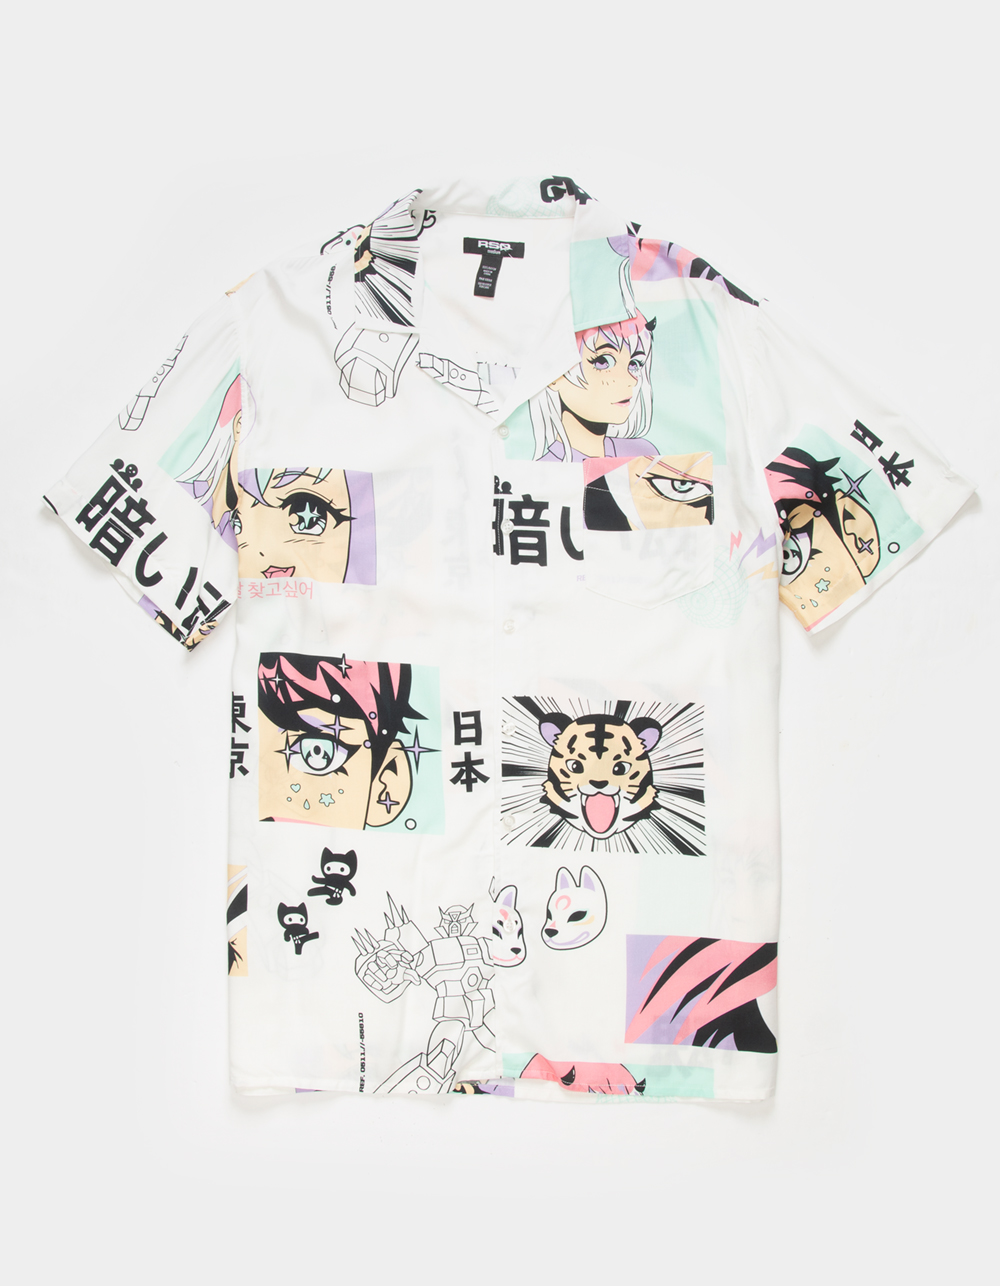 Samurai Button Up Shirt Mens Size Large multicolor Anime  eBay